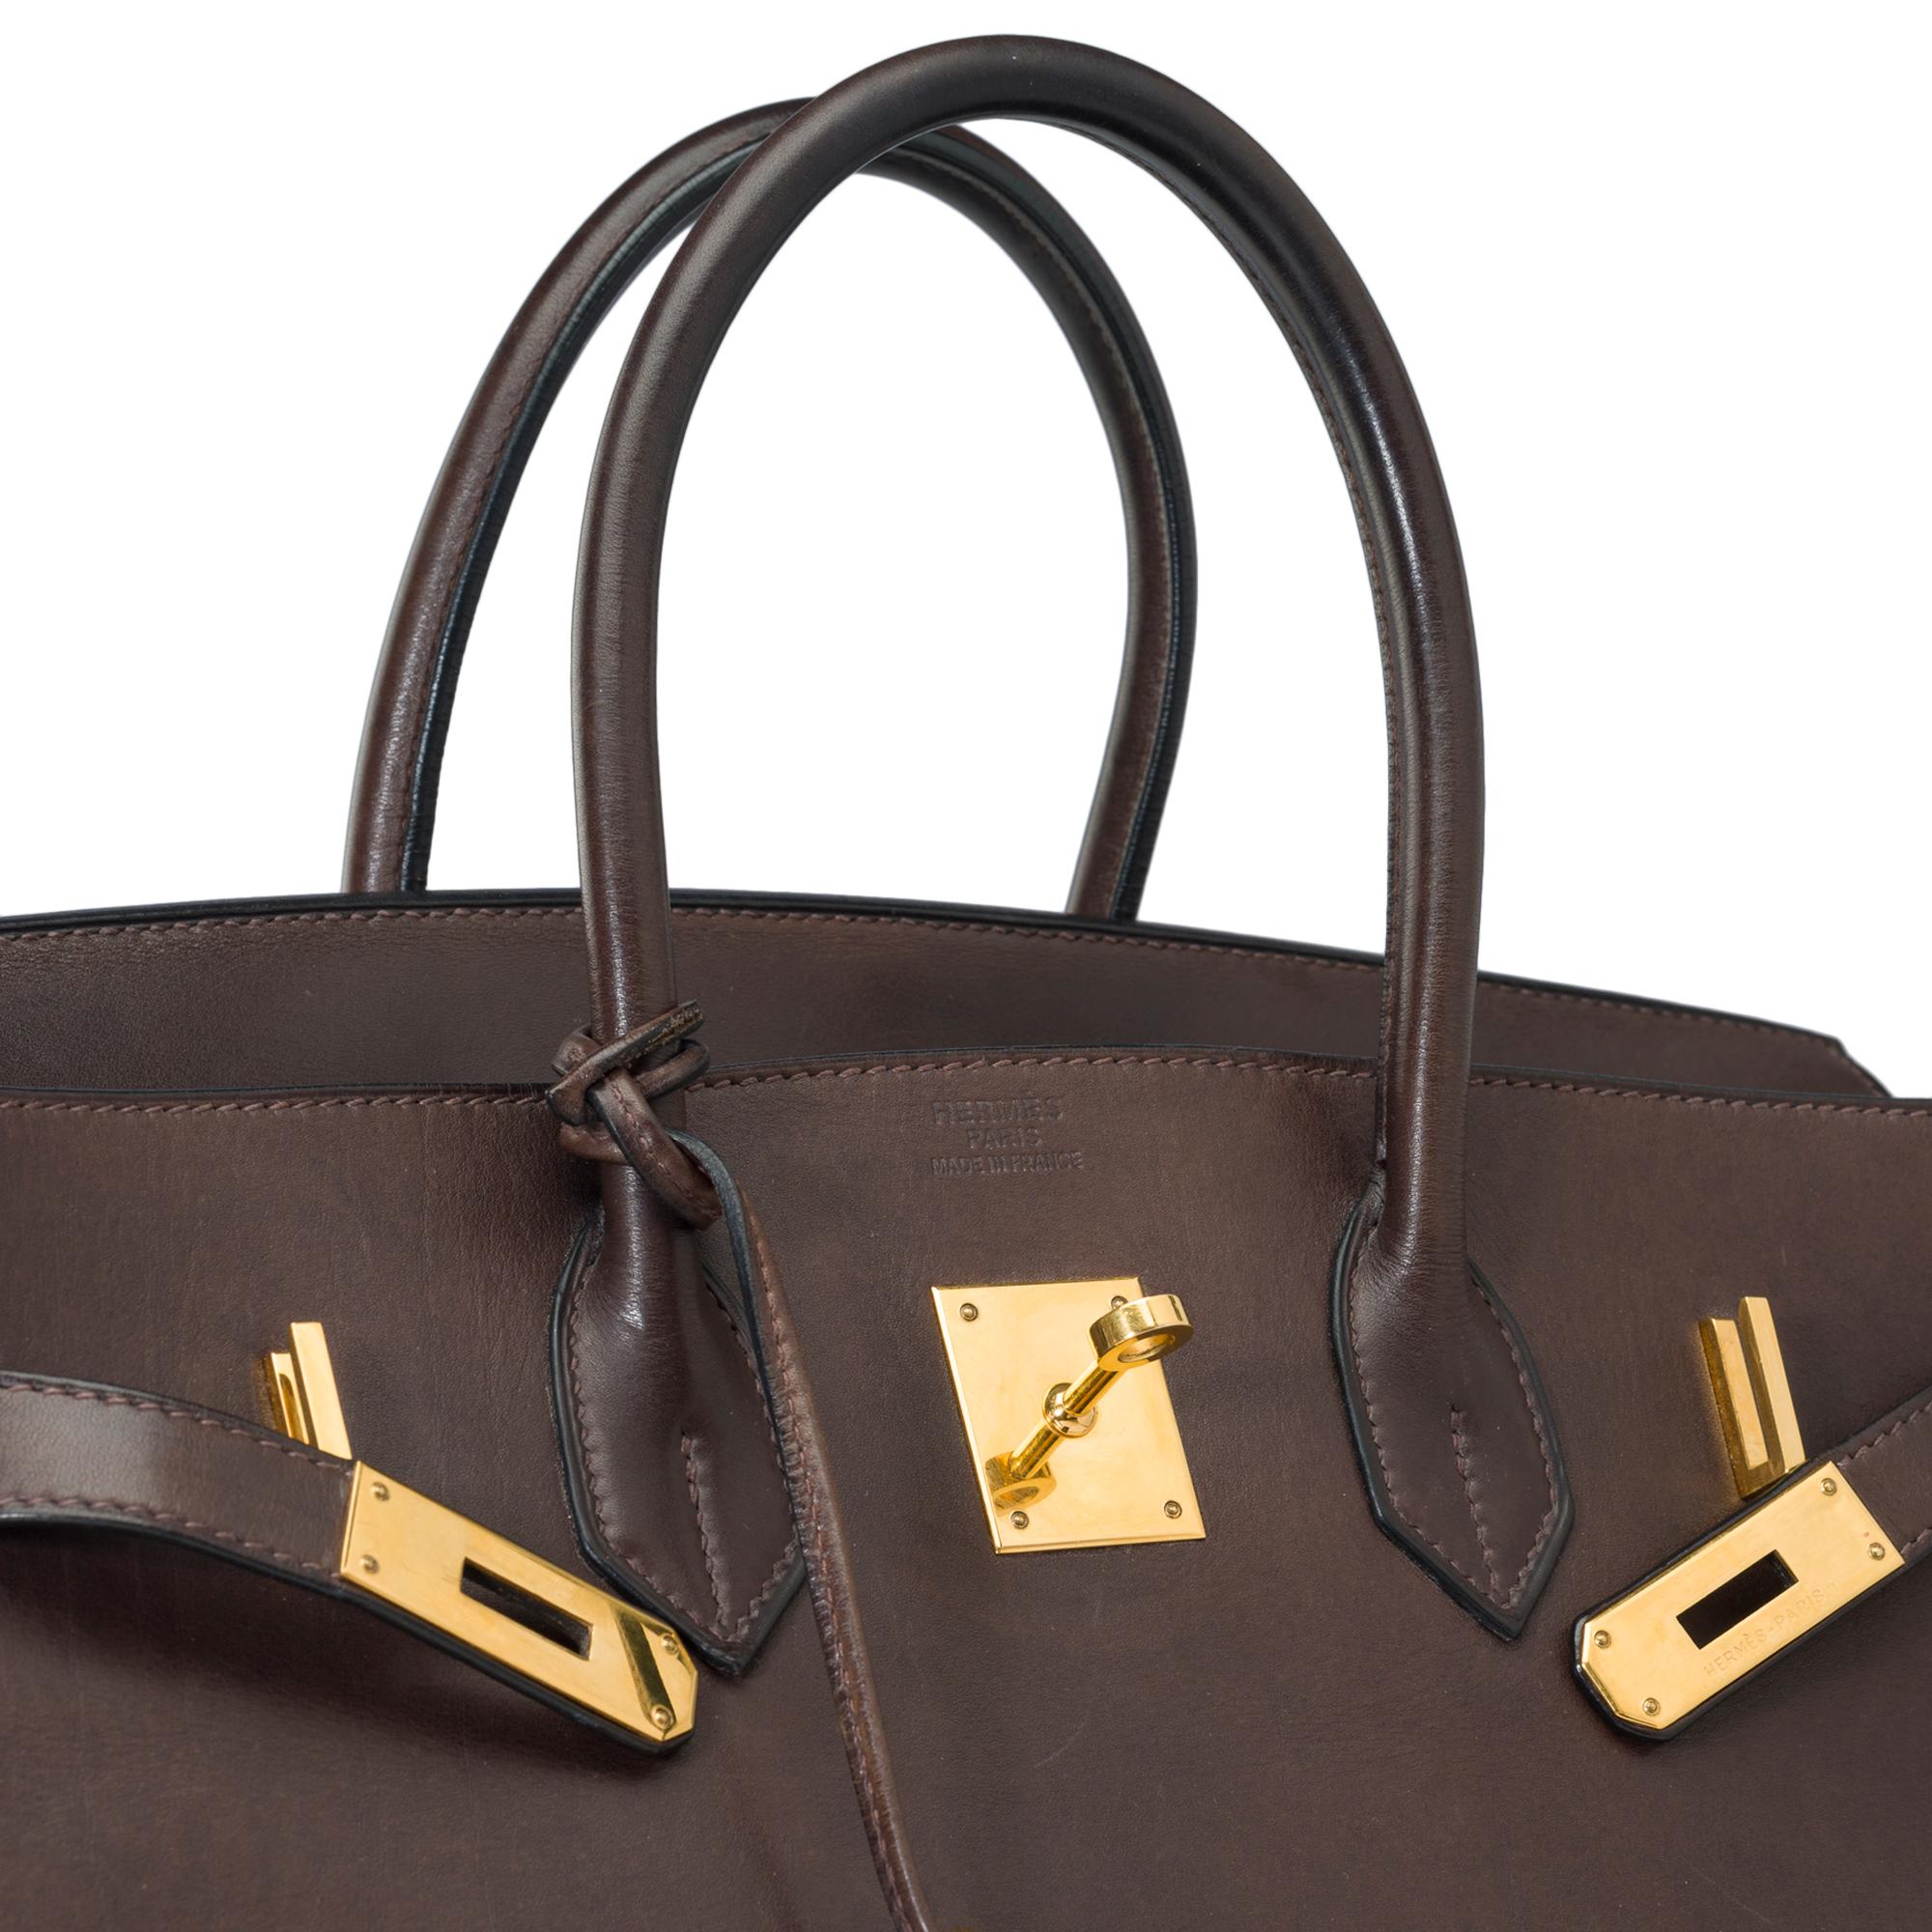 Rare & Exceptional Hermès Birkin 35 handbag in Ebony Brown Barenia leather, GHW For Sale 2